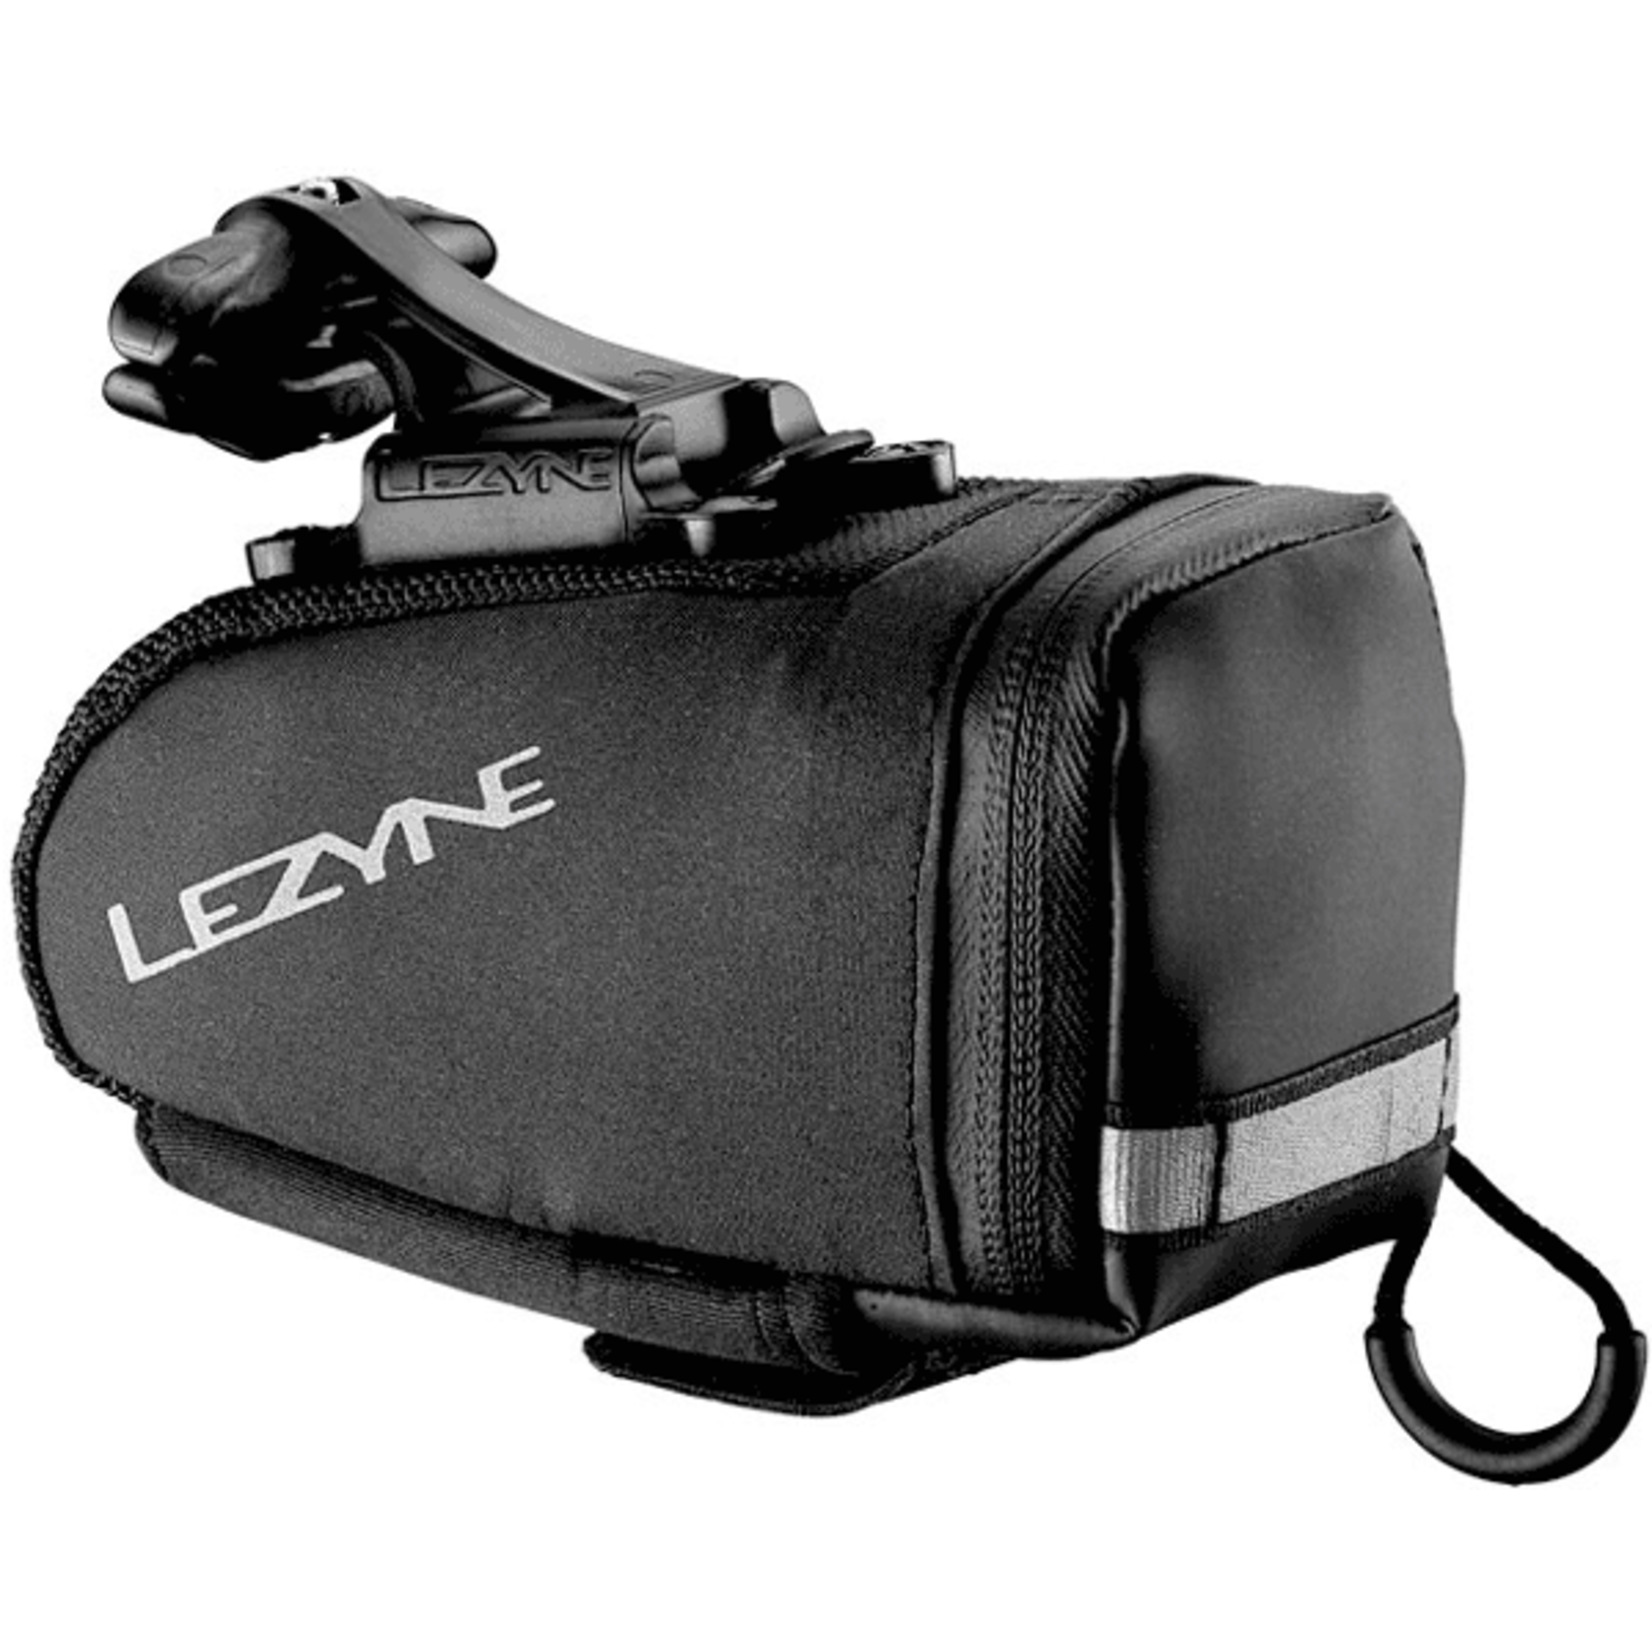 Lezyne Lezyne - M Caddy QR Seat Bag- Black